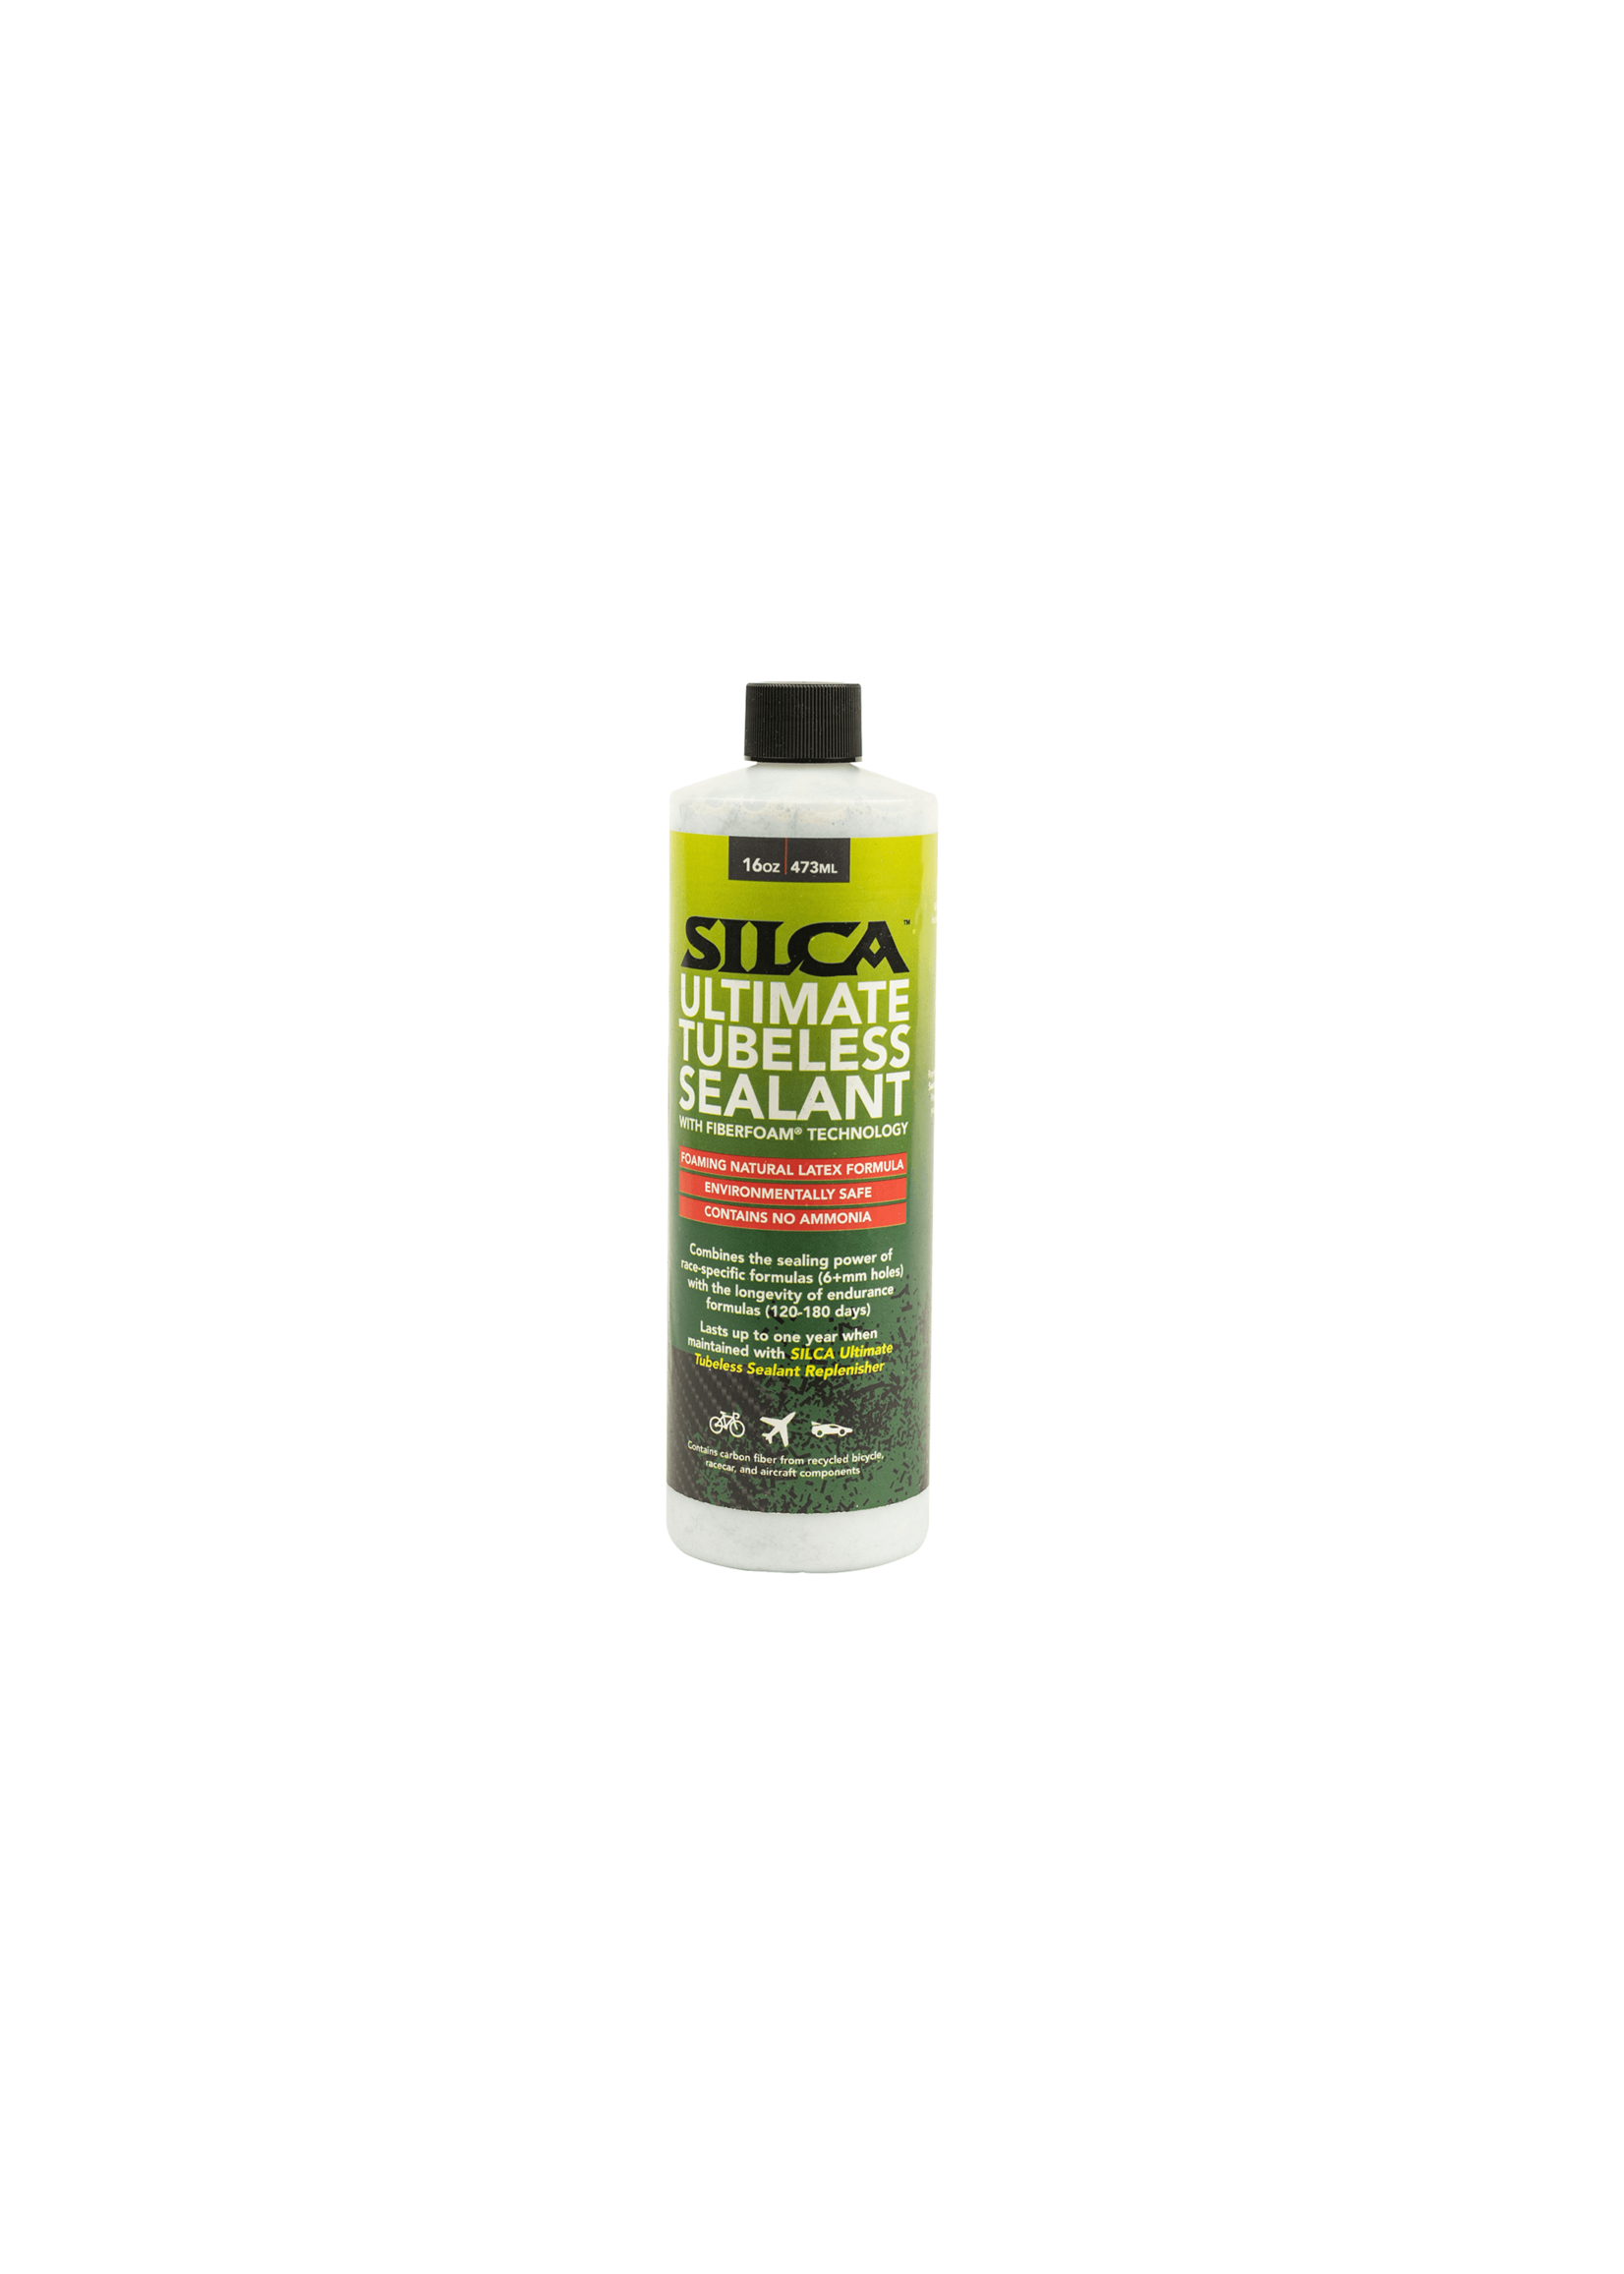 Silca Silca- Ultimate Tubeless Sealant, 16oz